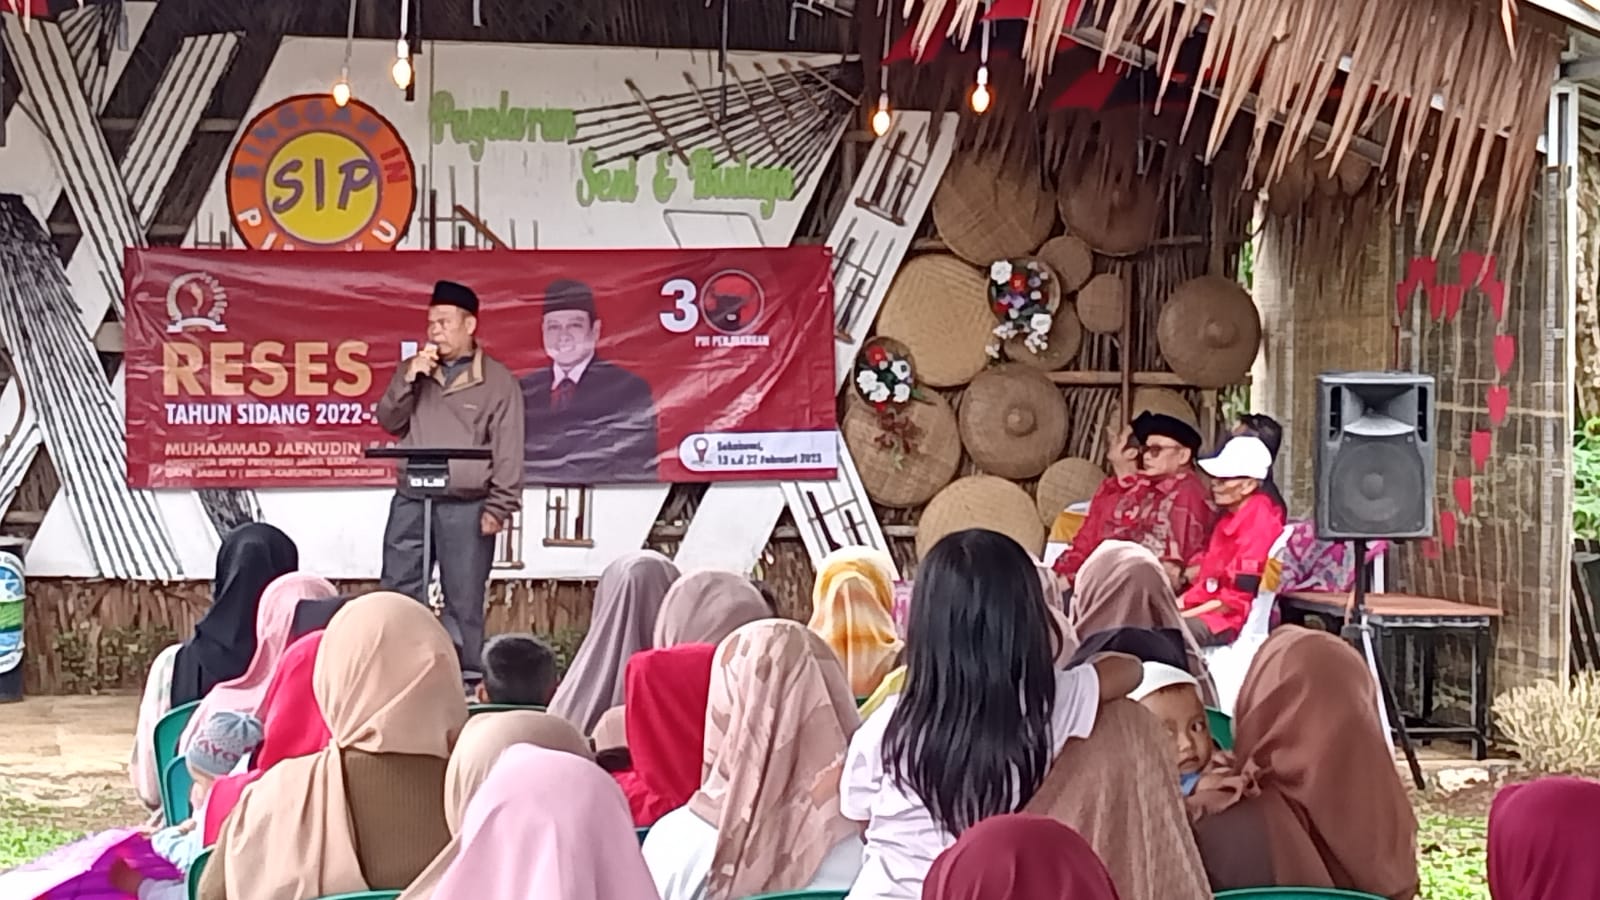 RESES : Anggota Dewan Perwakilan Rakyat Daerah (DPRD) Provinsi Jawa Barat (Jabar) fraksi PDI Perjuangan Muhammad Jaenudin menyerap aspirasi masyarakat melalui reses pada tahun sidang 2022-2023 di Desa Cisande.